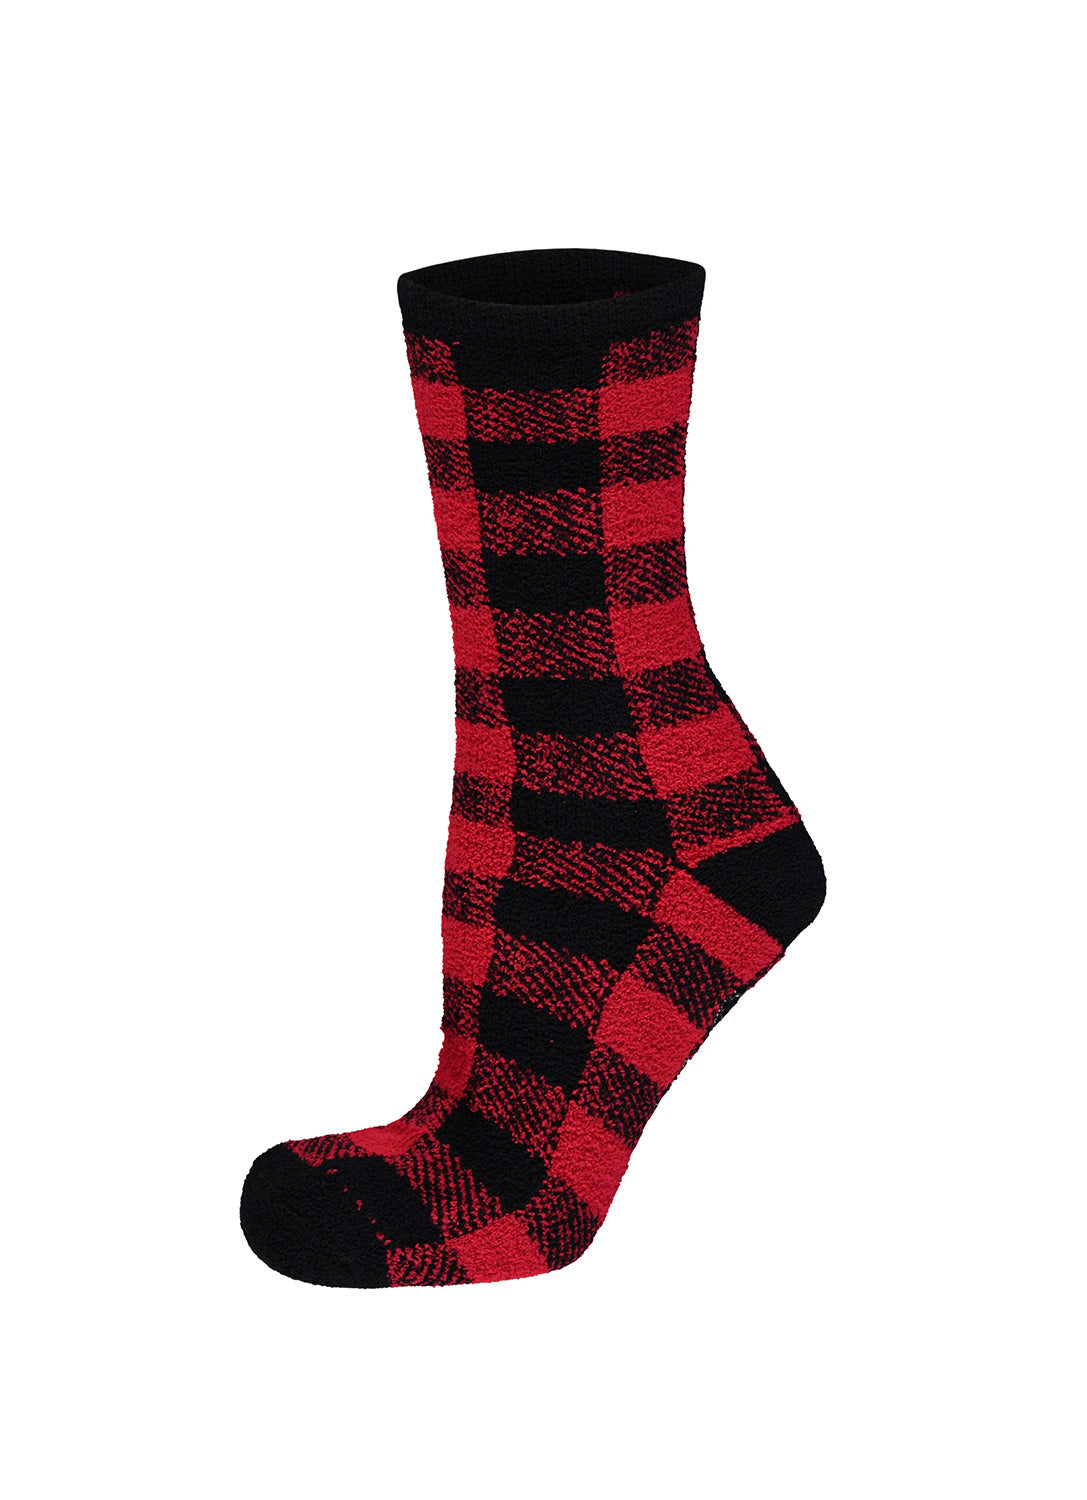 Womens Red Plaid Family Sleepwear Socks